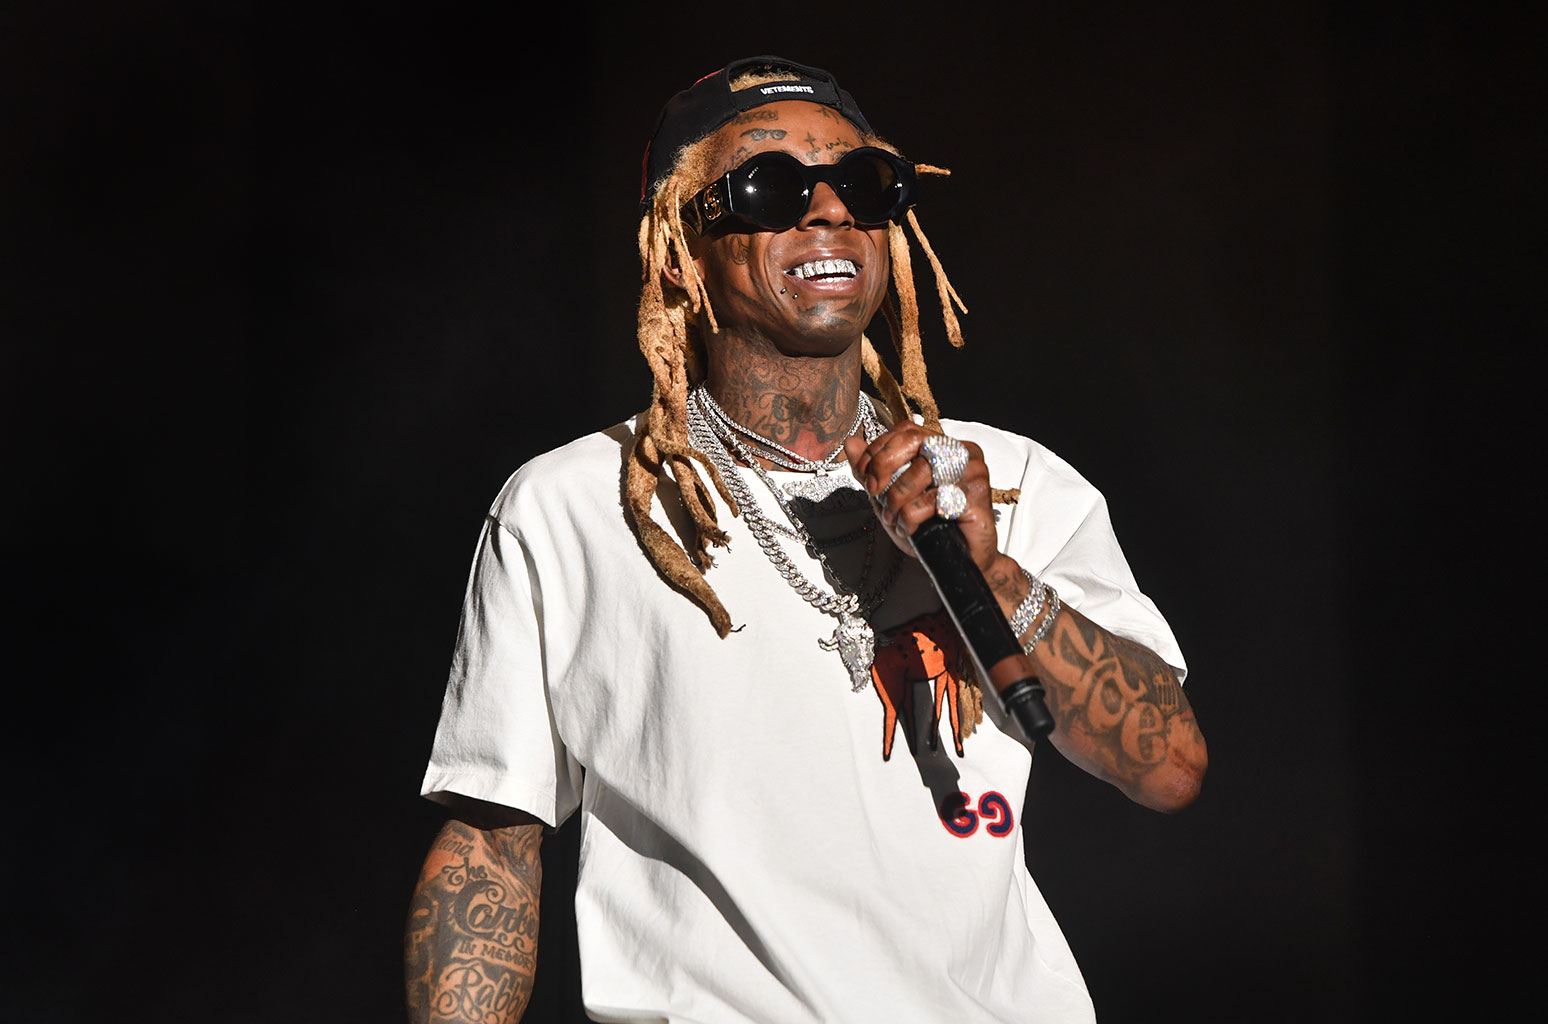 Lil Wayne Is 'Sleepless' Over Troubled Love on Pulsating New Track: Listen - www.billboard.com